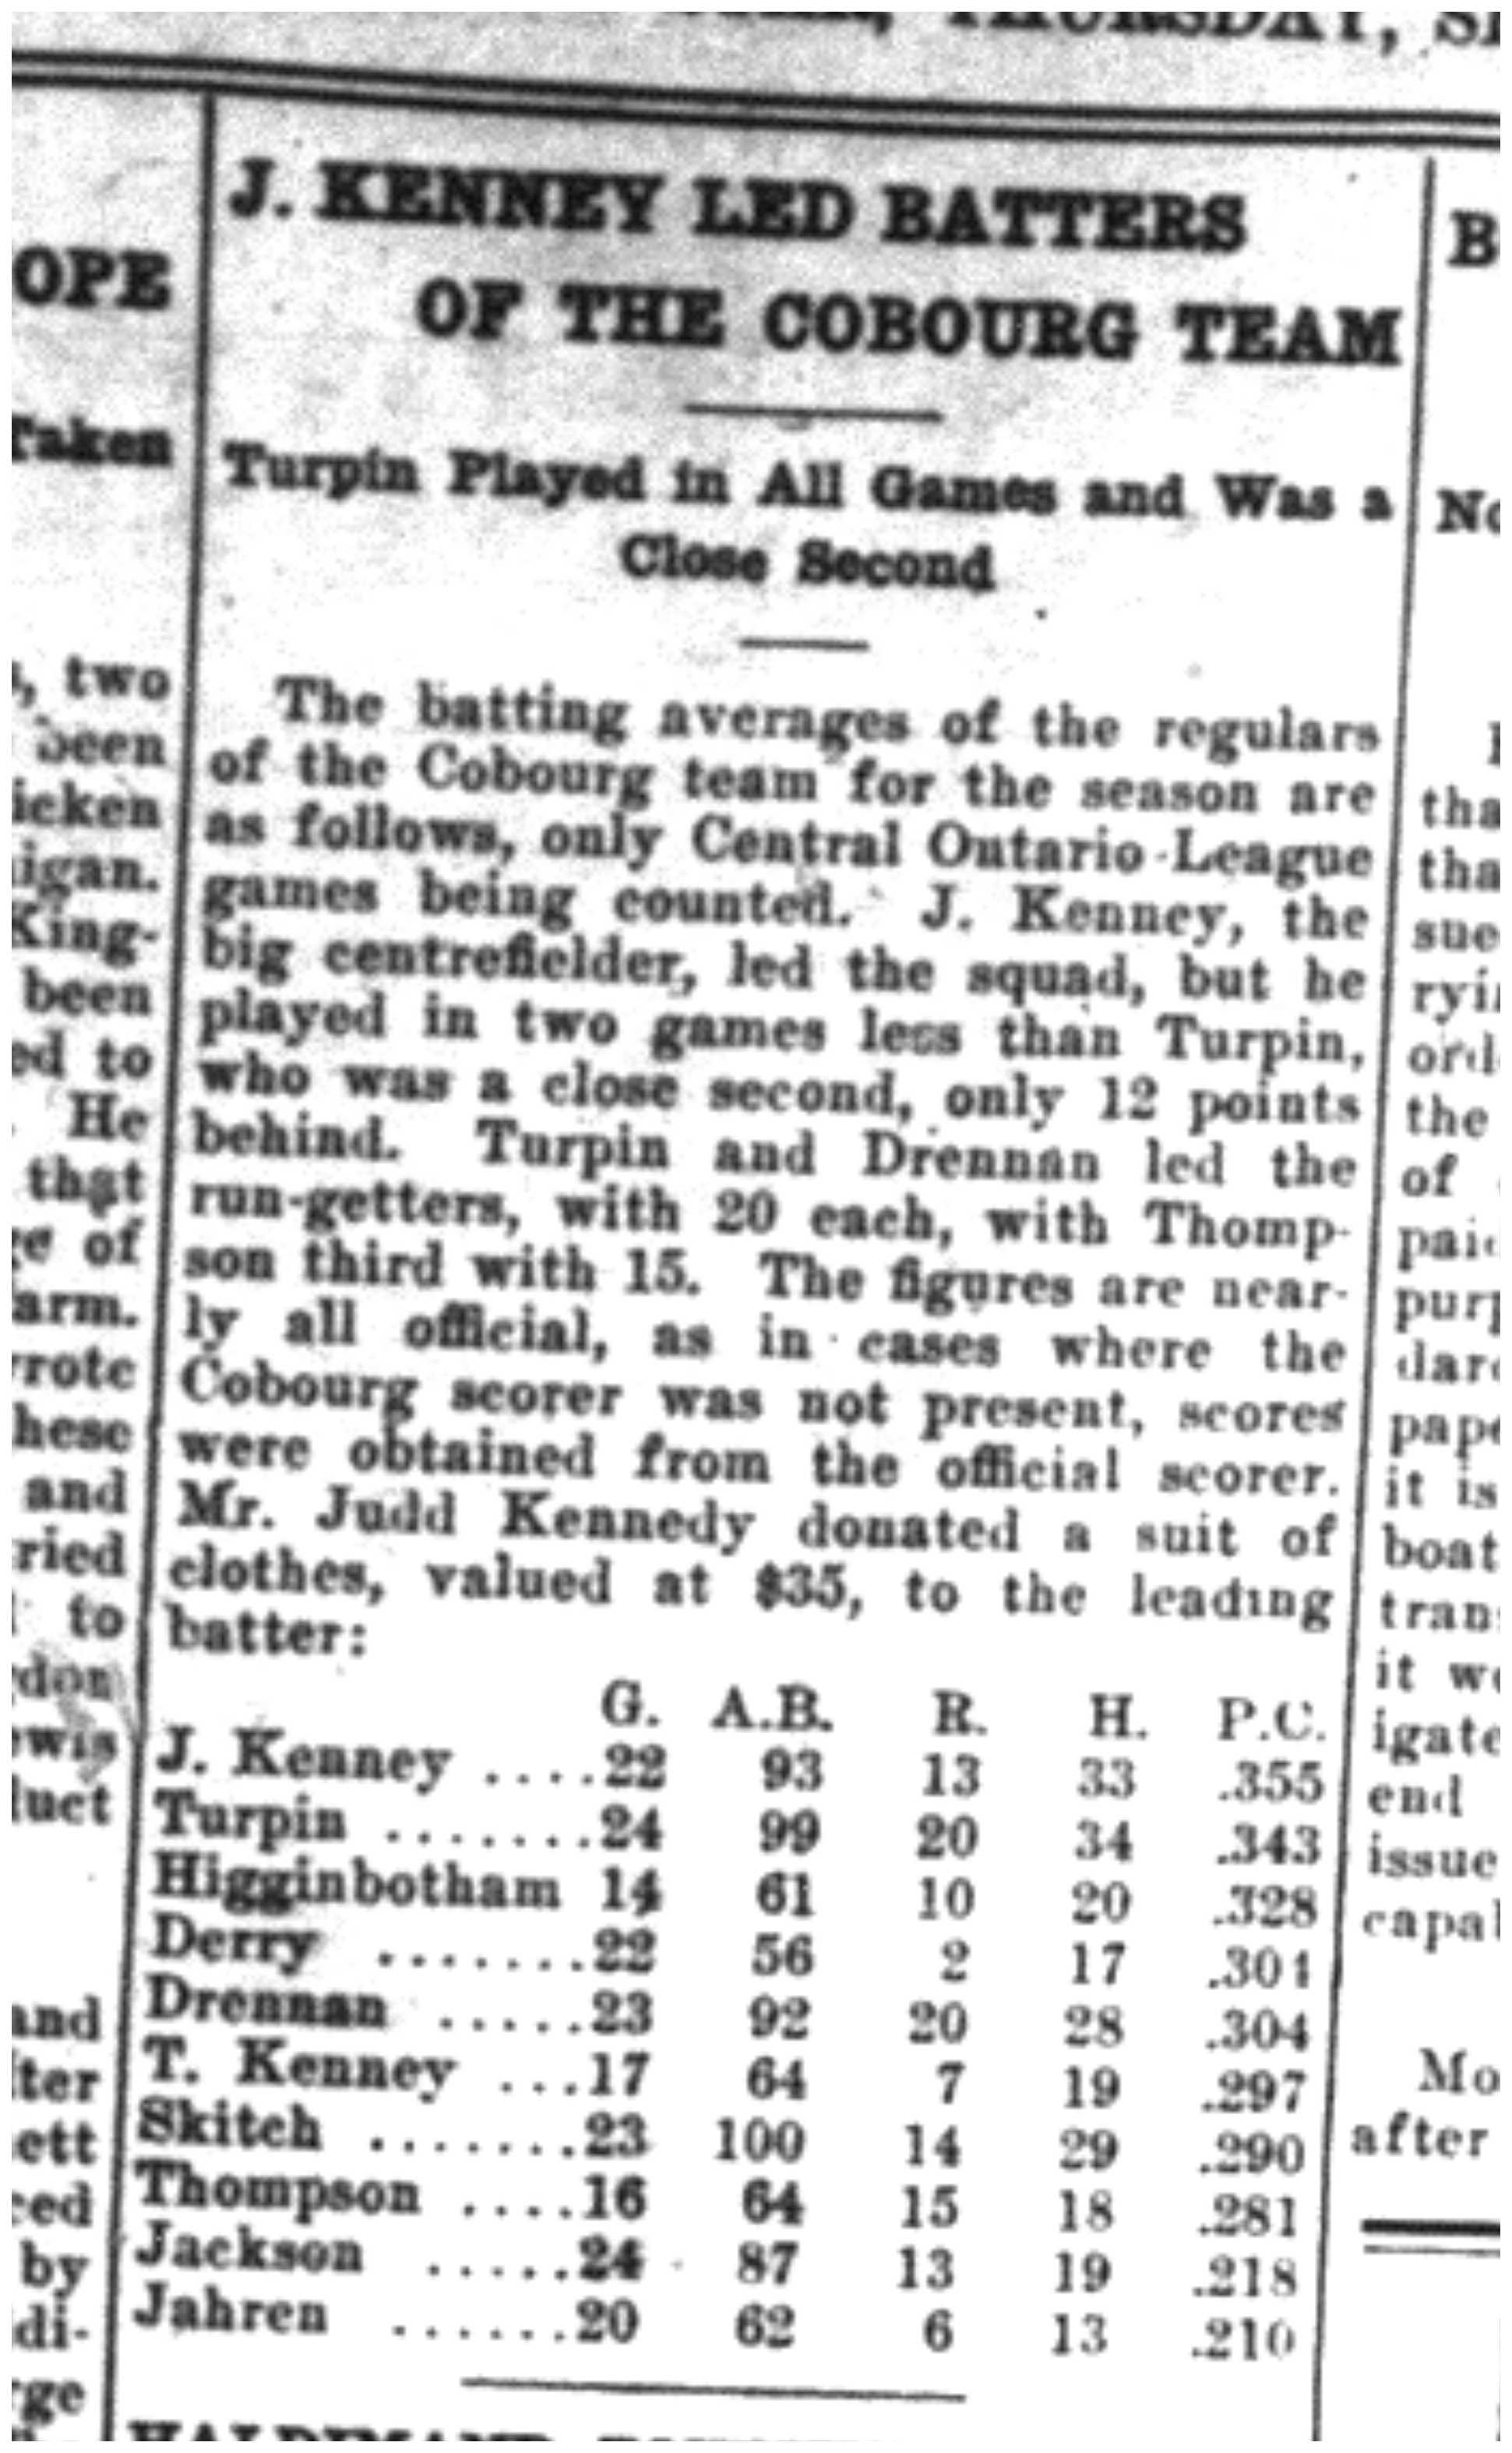 1923-09-06 Baseball -Batting averages